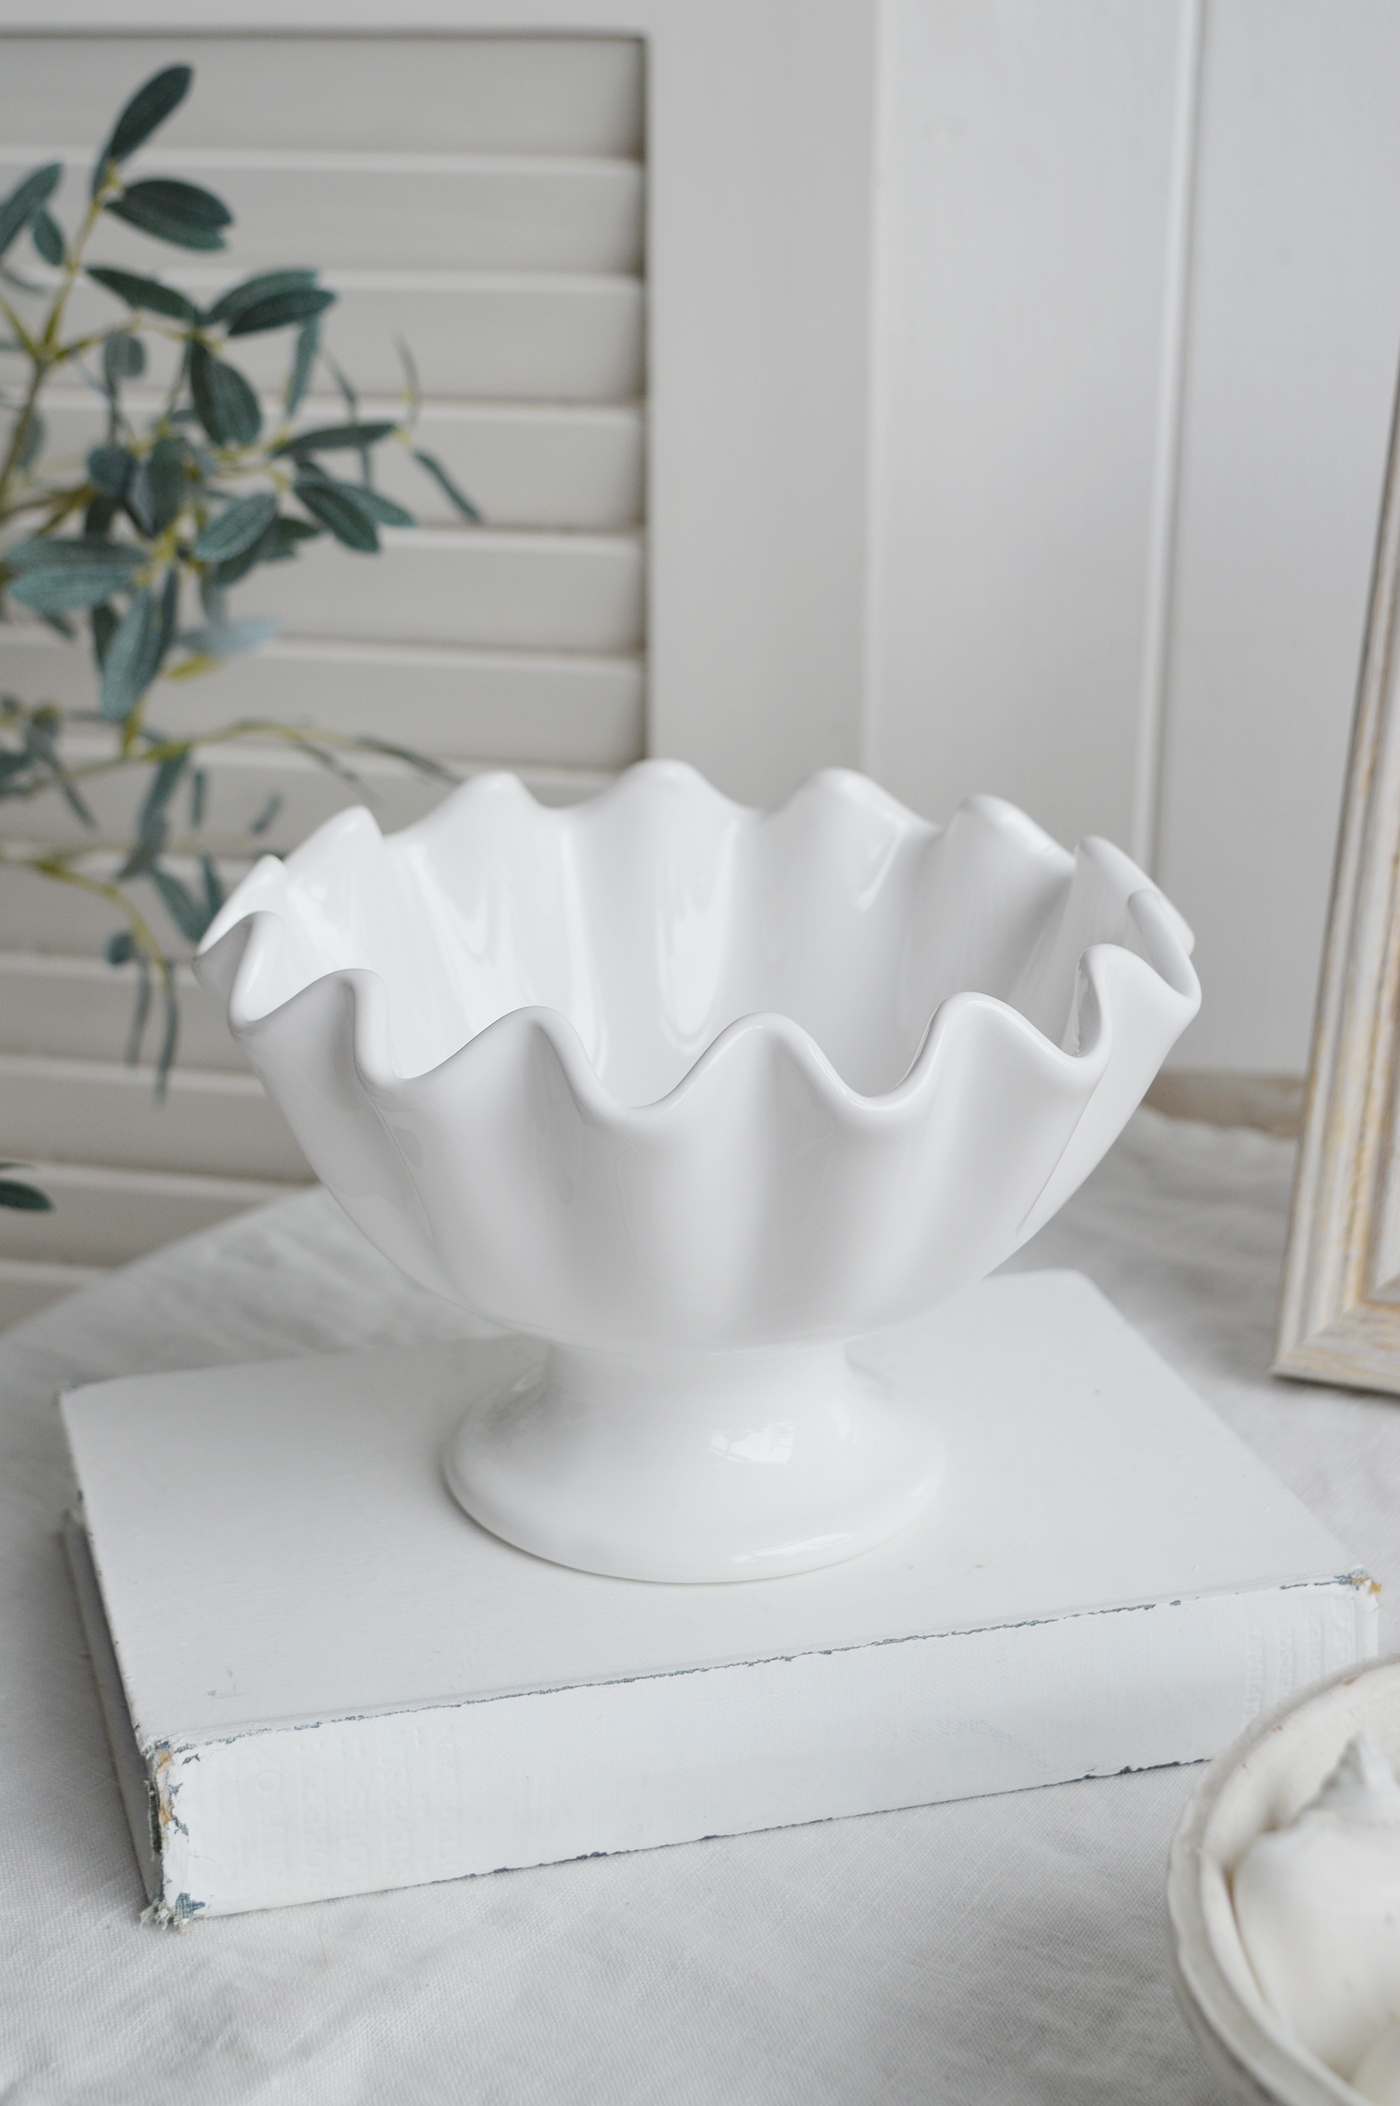 Range of White Ceramics, Hyannis White Ceramic Bowl for New England, farmhouse,  Country and coastal homes and interior decor